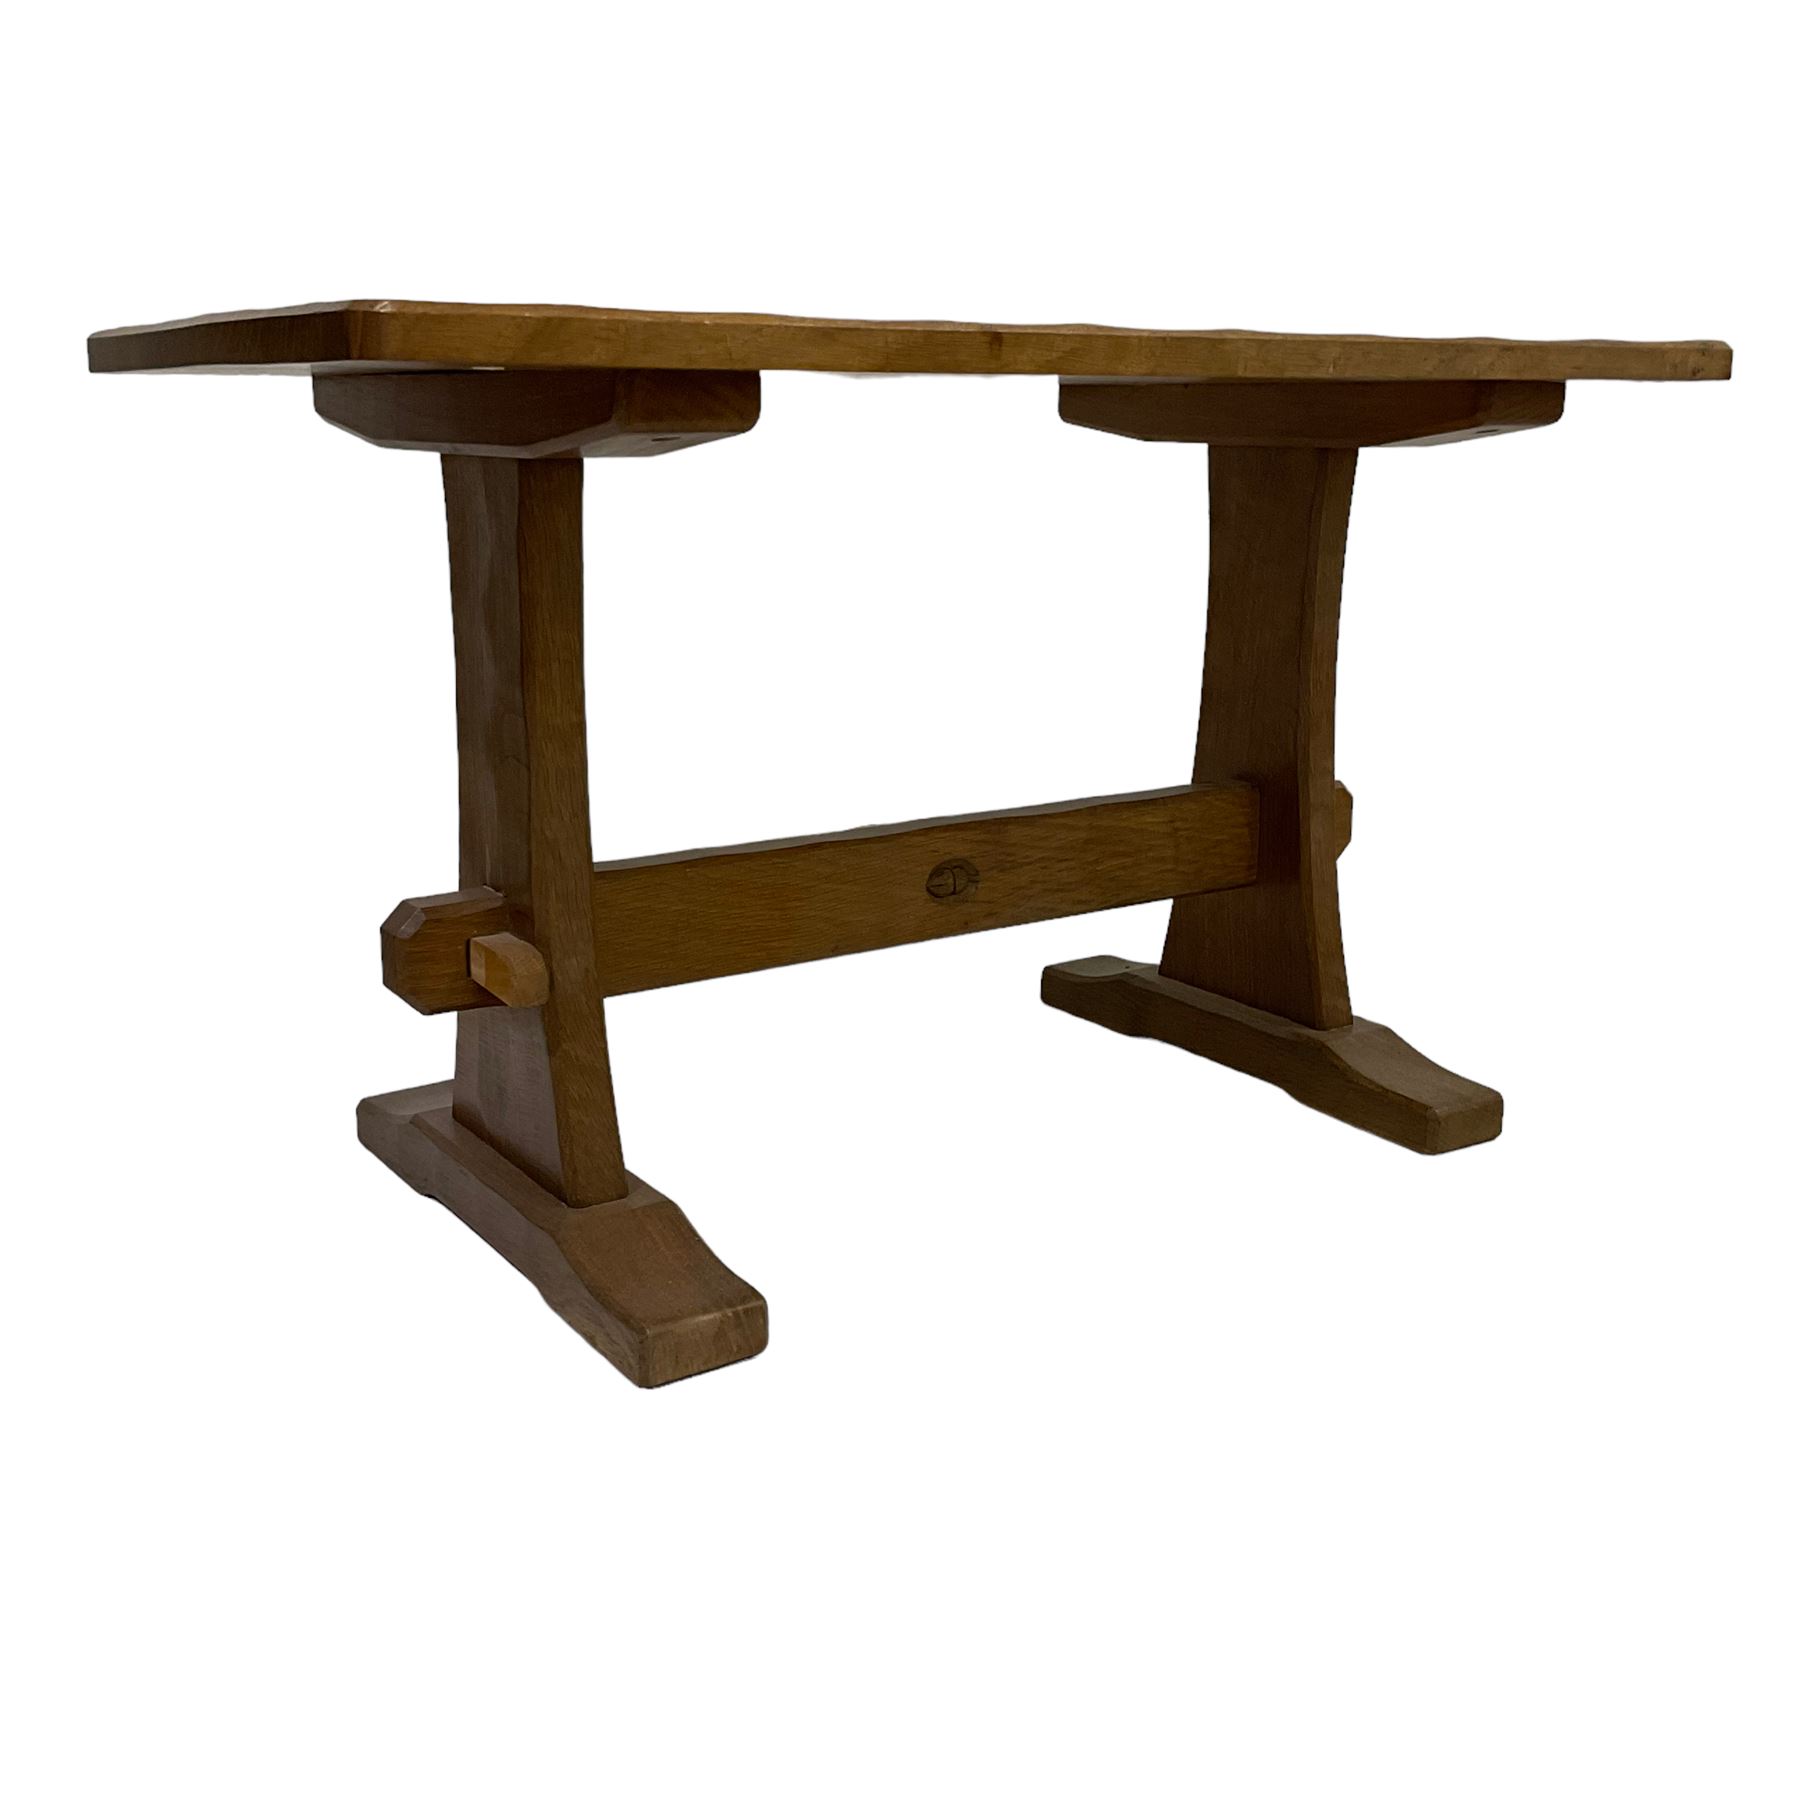 Acornman - oak coffee table - Image 3 of 5